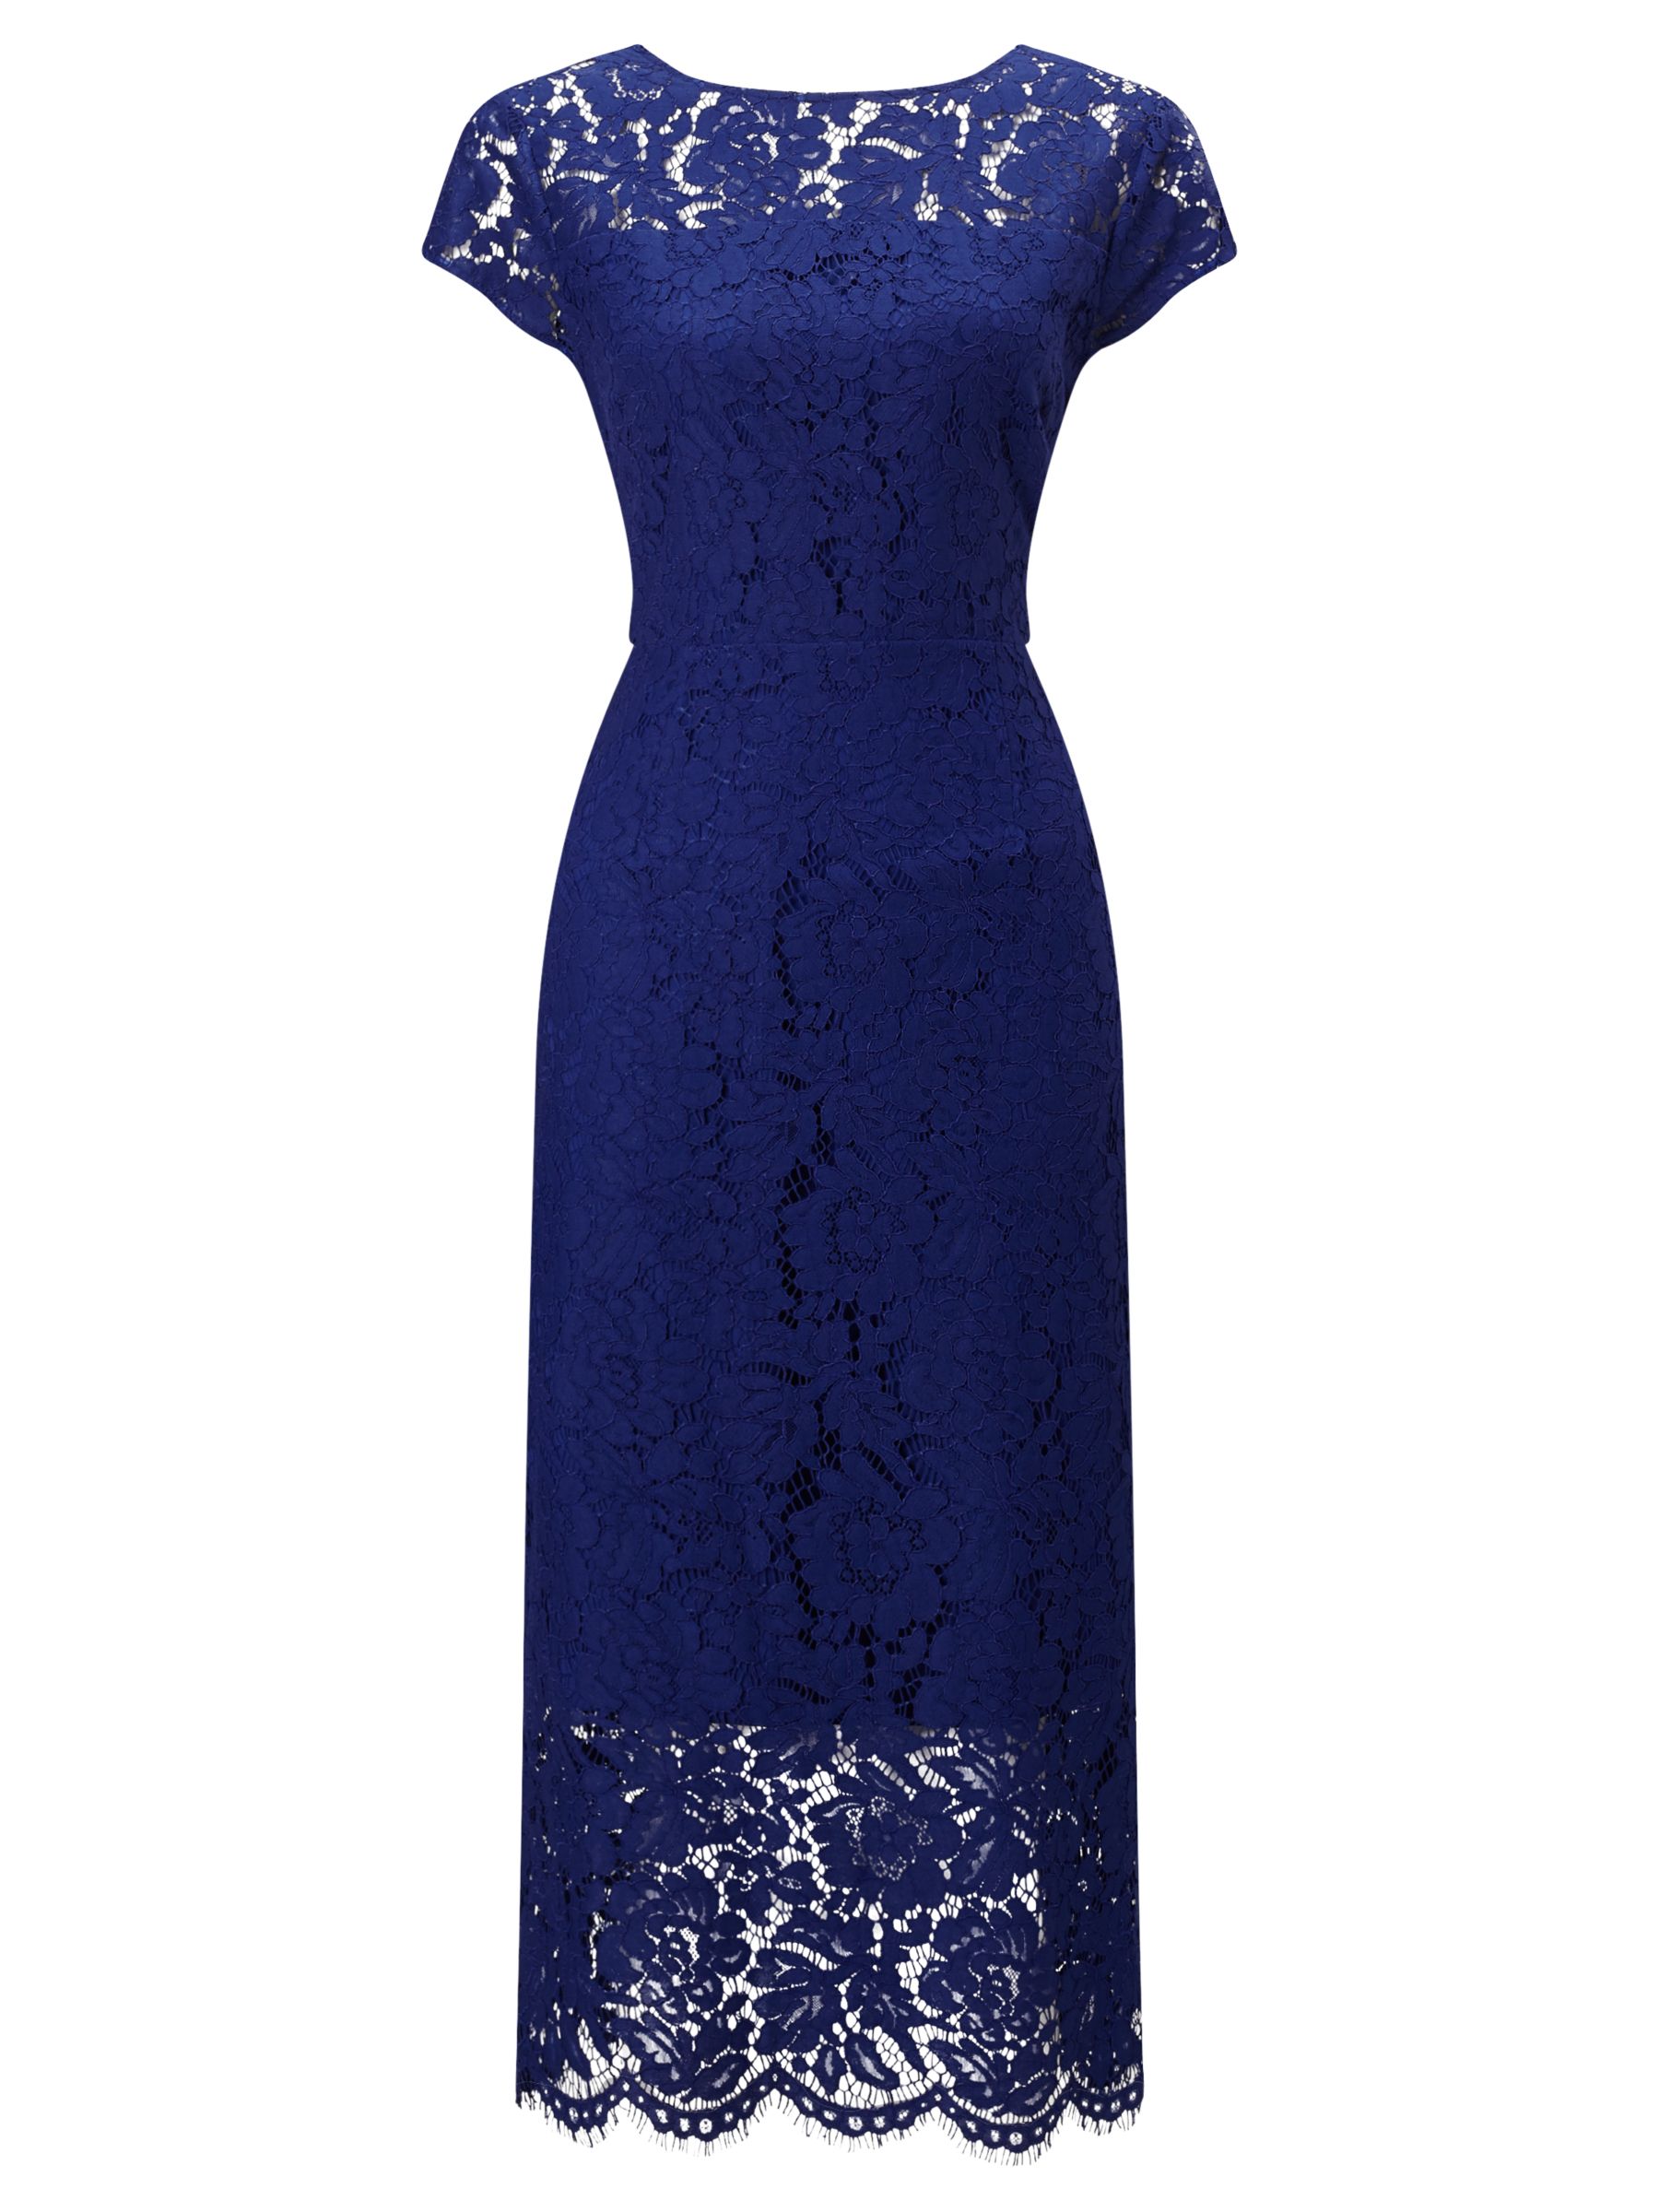 John Lewis & Partners Short Sleeve Lace Dress, Blue, 8